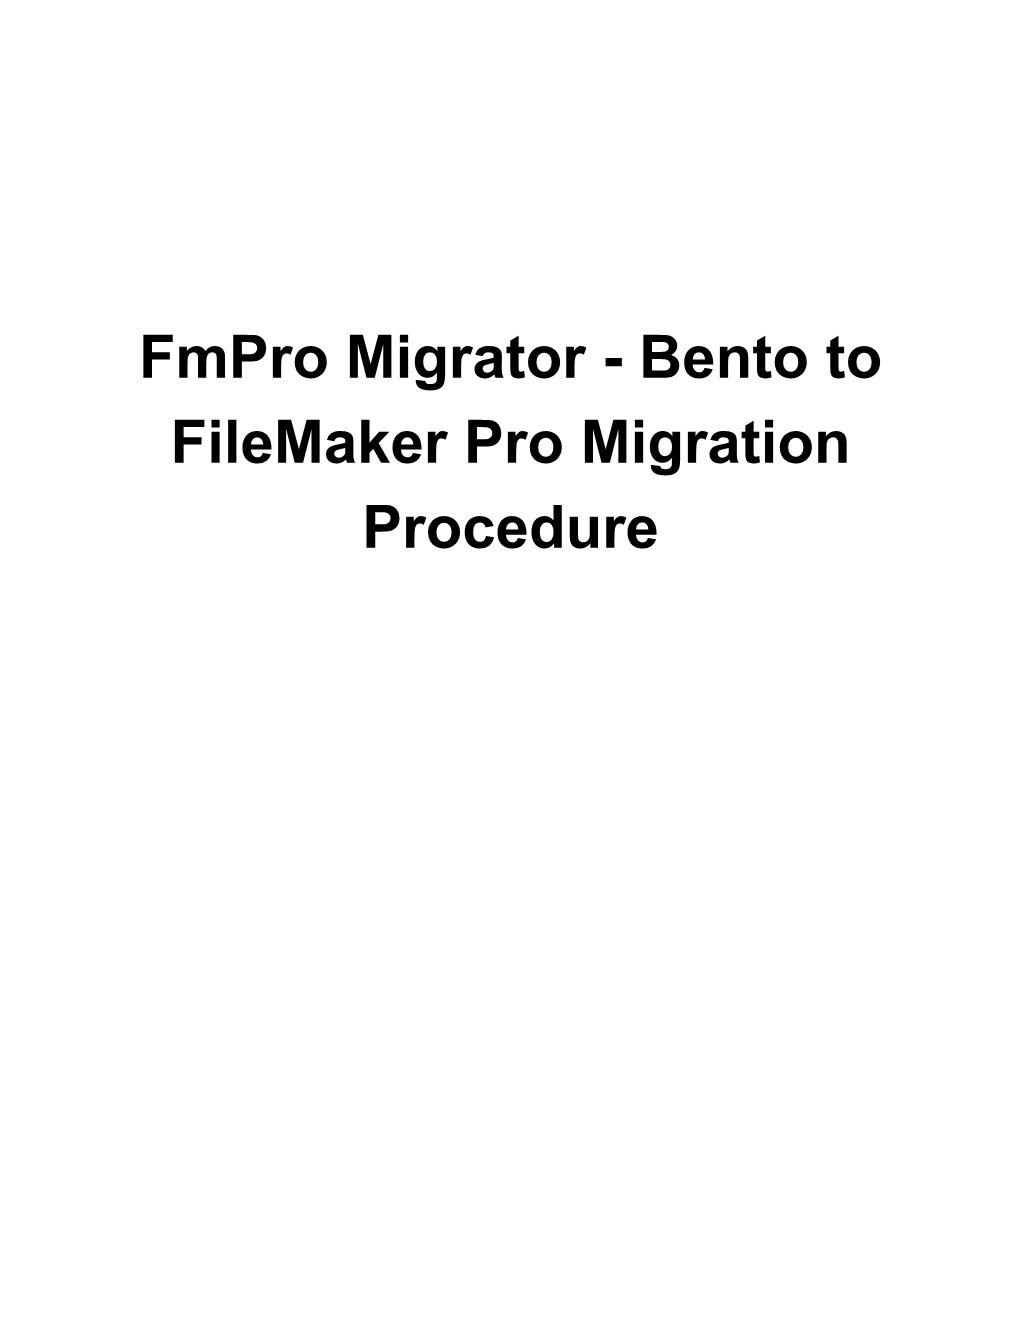 Bento to Filemaker Pro Migration Procedure 1